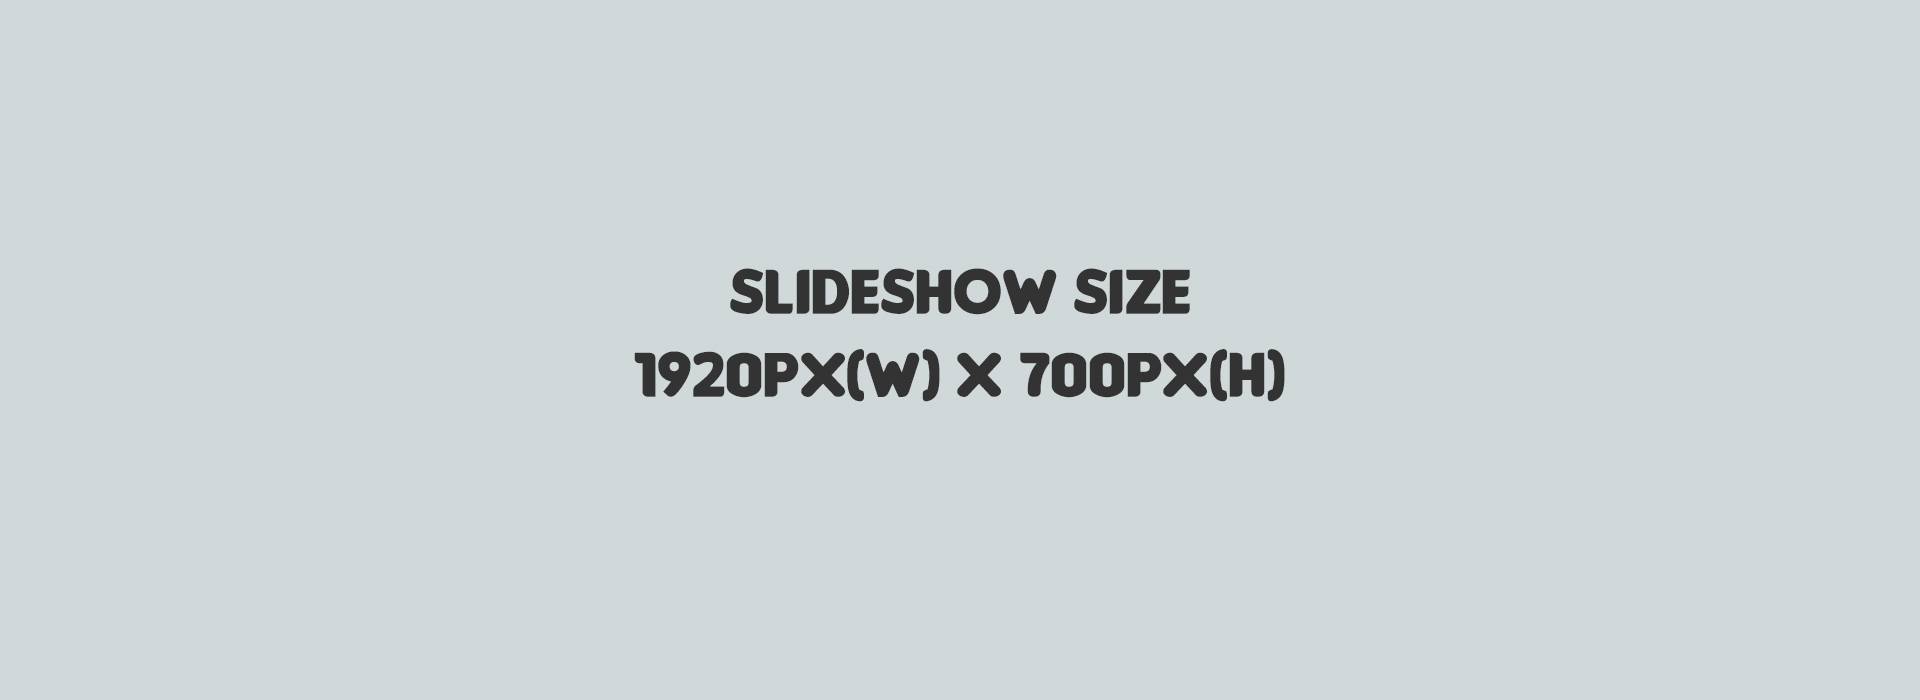 Slideshow size